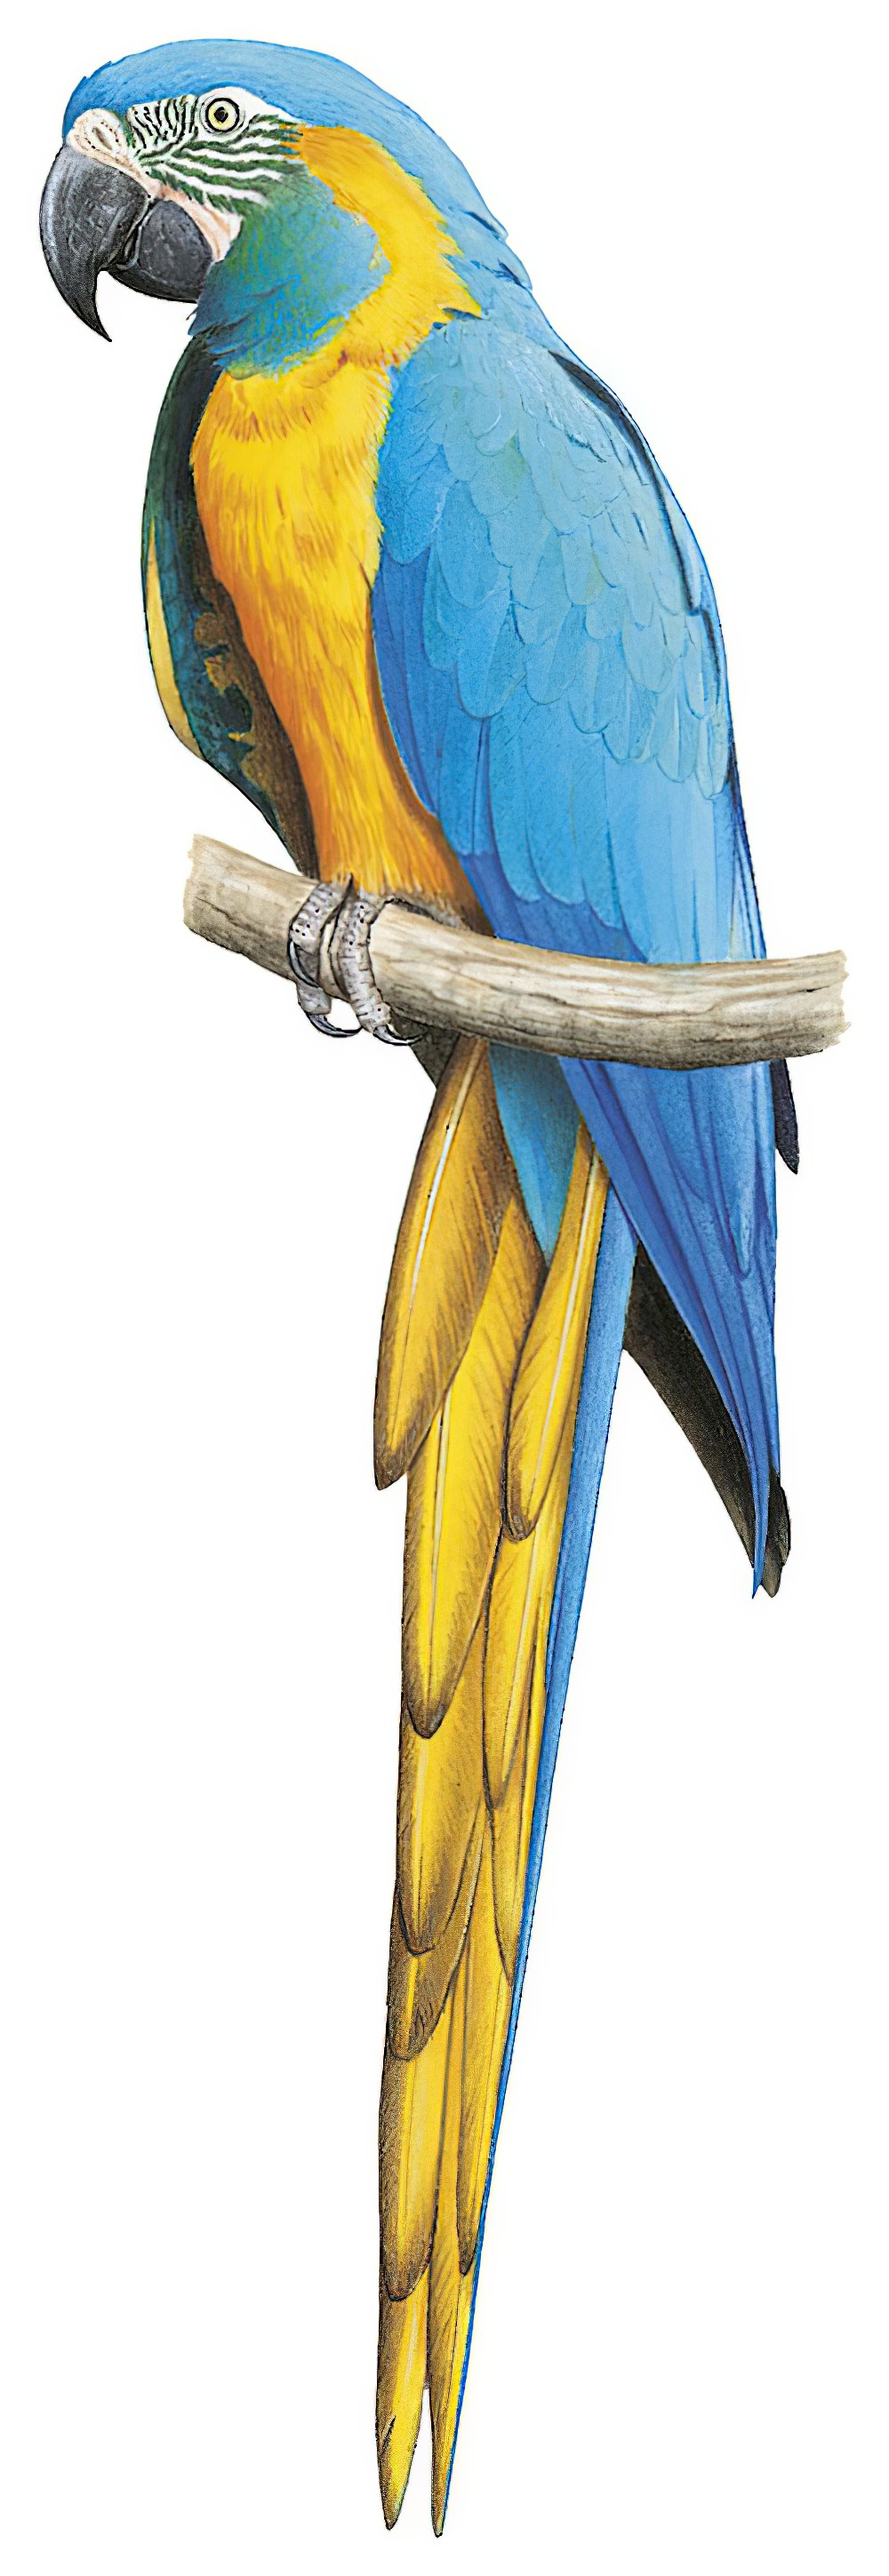 Blue-throated Macaw / Ara glaucogularis